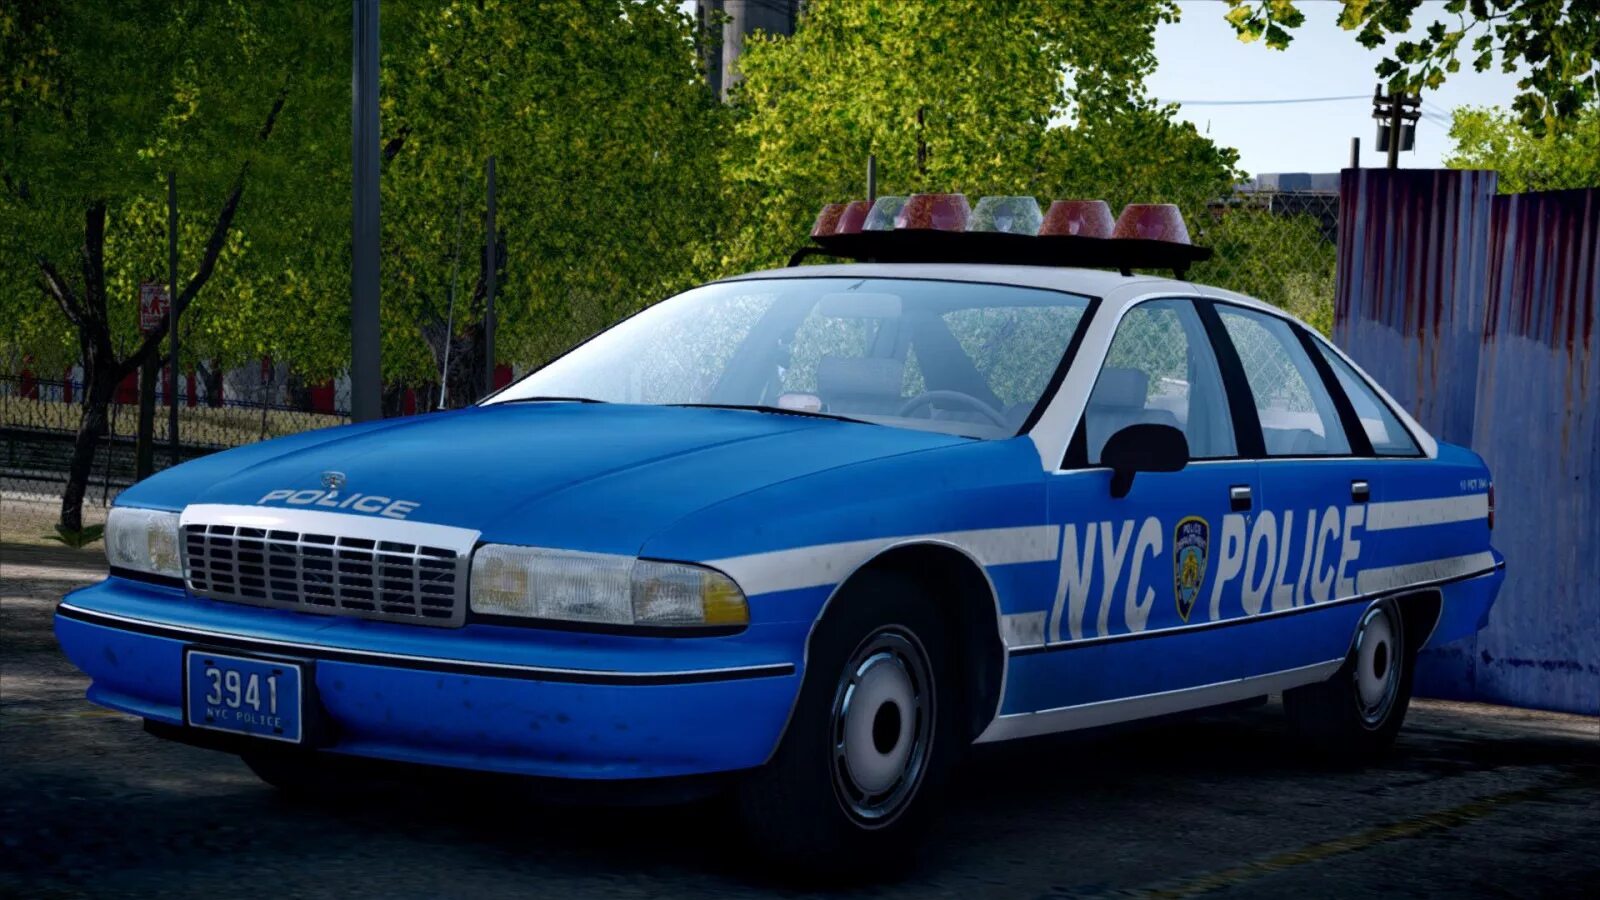 15 полицейская машина. Chevrolet Caprice 1995. Chevrolet Caprice 2000. Chevrolet Caprice 1991 Police. Chevrolet Caprice 1991 NYPD.